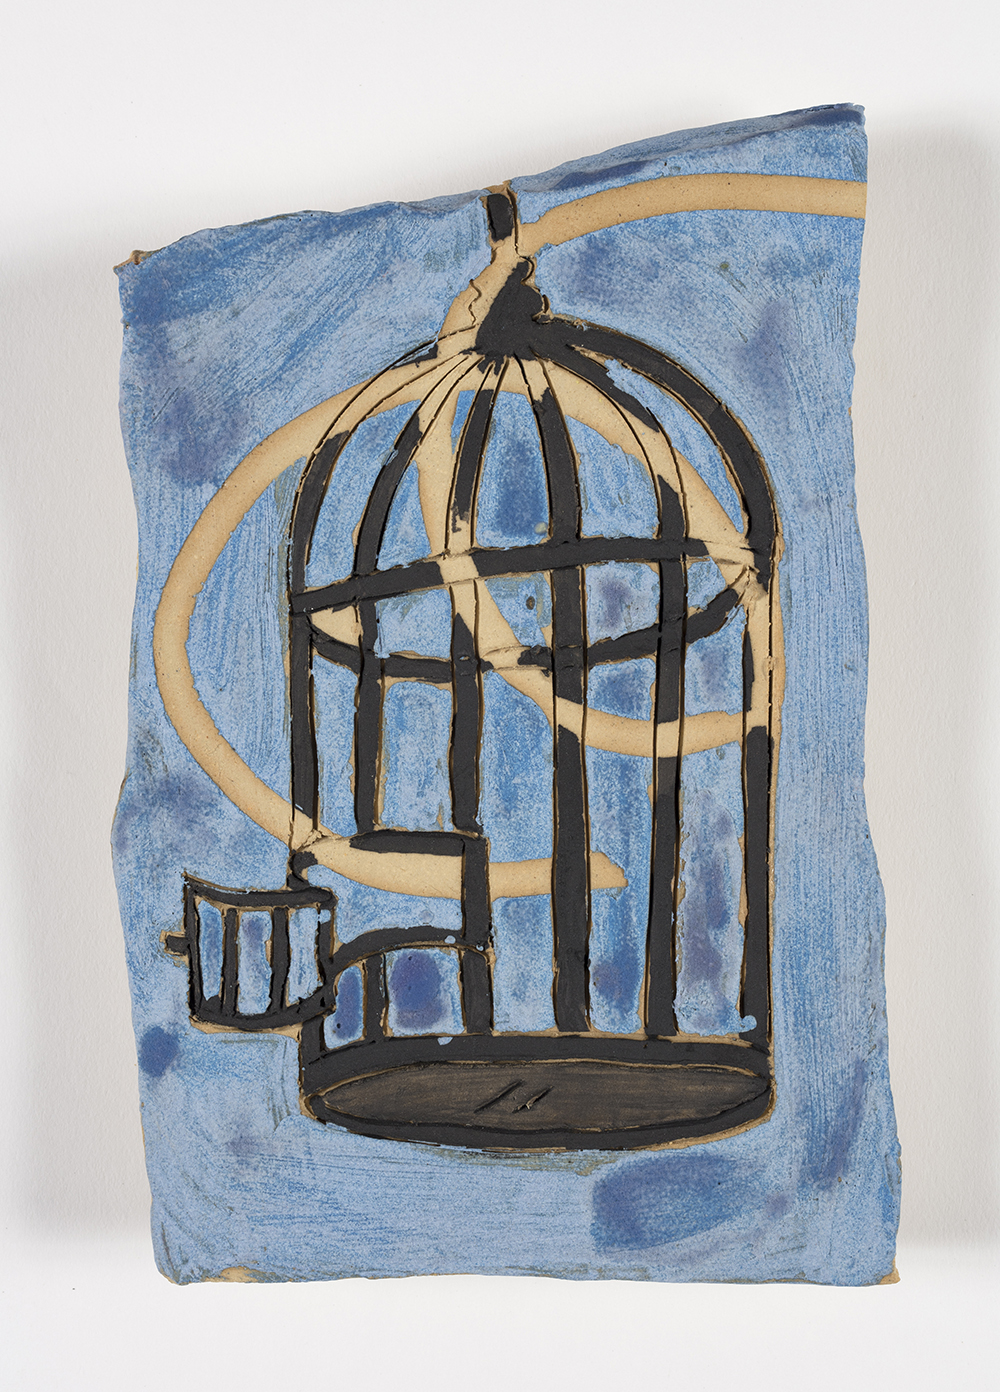 Kevin McNamee-Tweed.<em> Esc</em>, 2019. Glazed ceramic, 7 1/4 x 5 inches (18.4 x 12.7 cm)